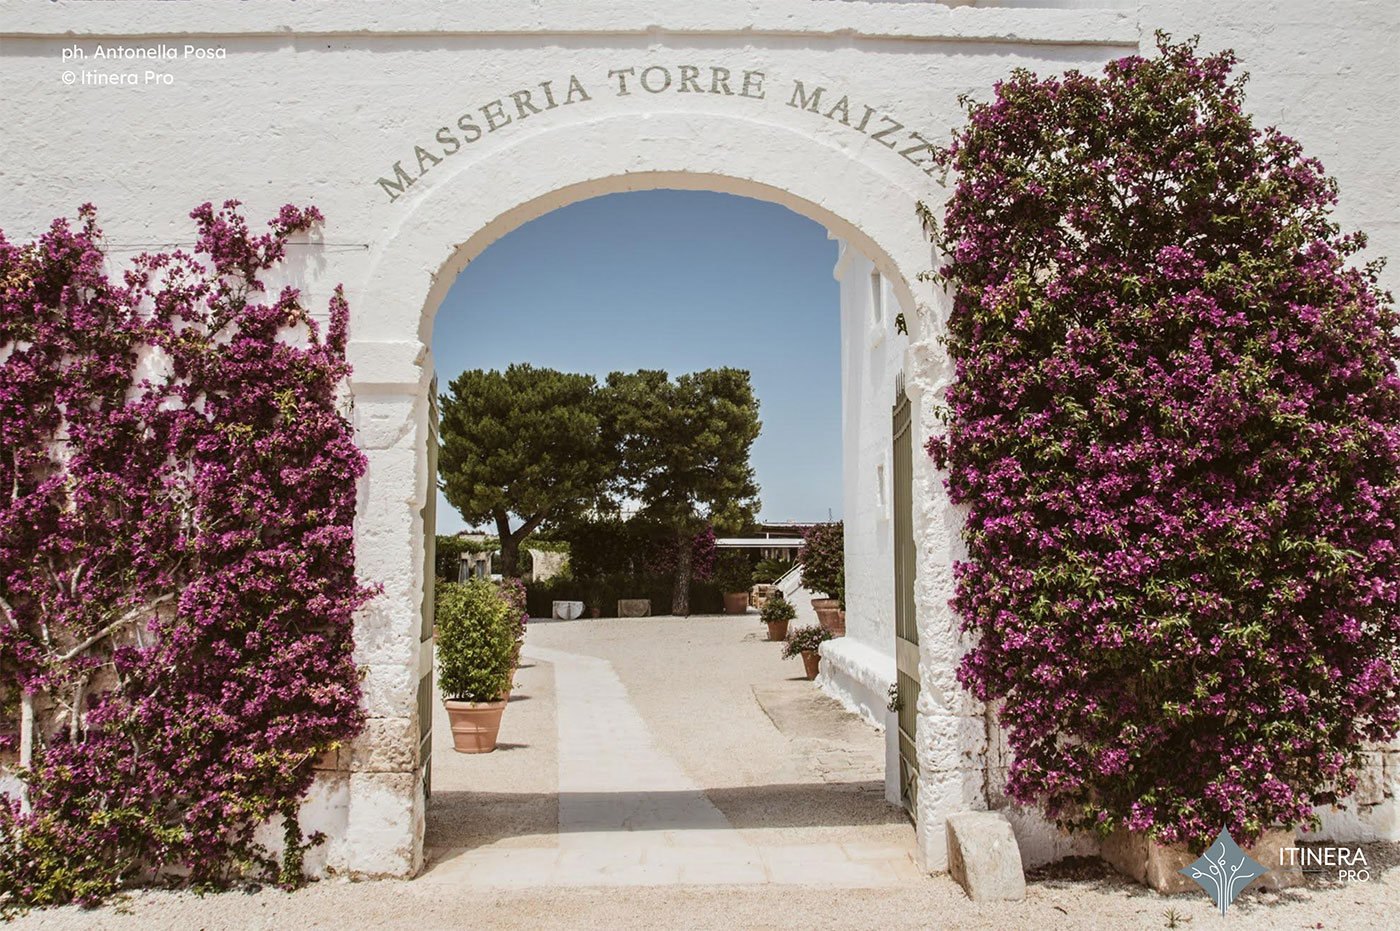 Masseria Torre Maizza Wedding Venue